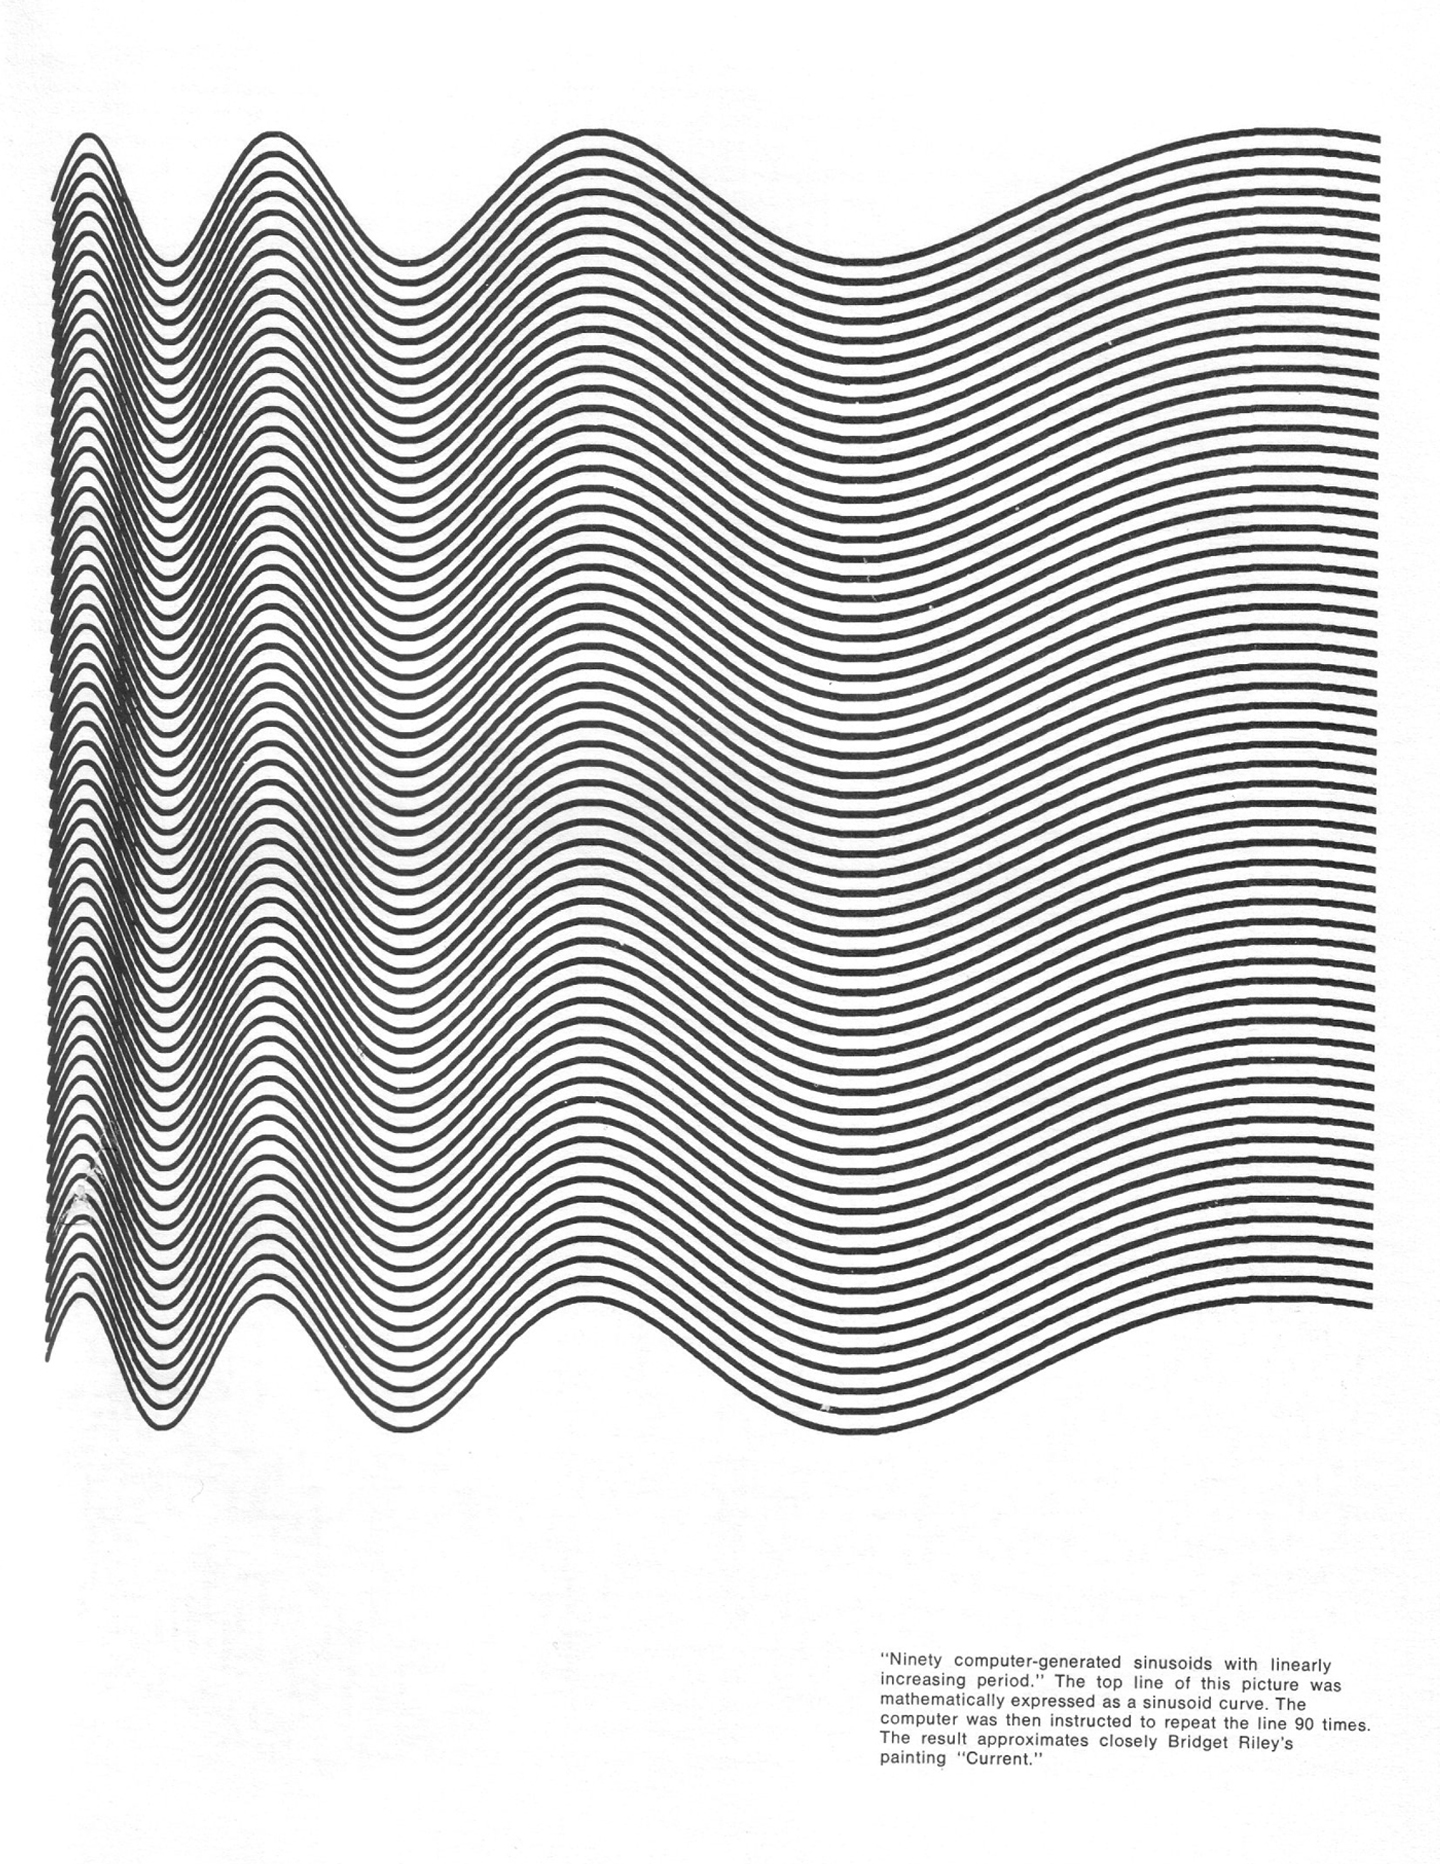 _ok_07 a-michael-noll_ninety-computer-generated-sinusoids_1965